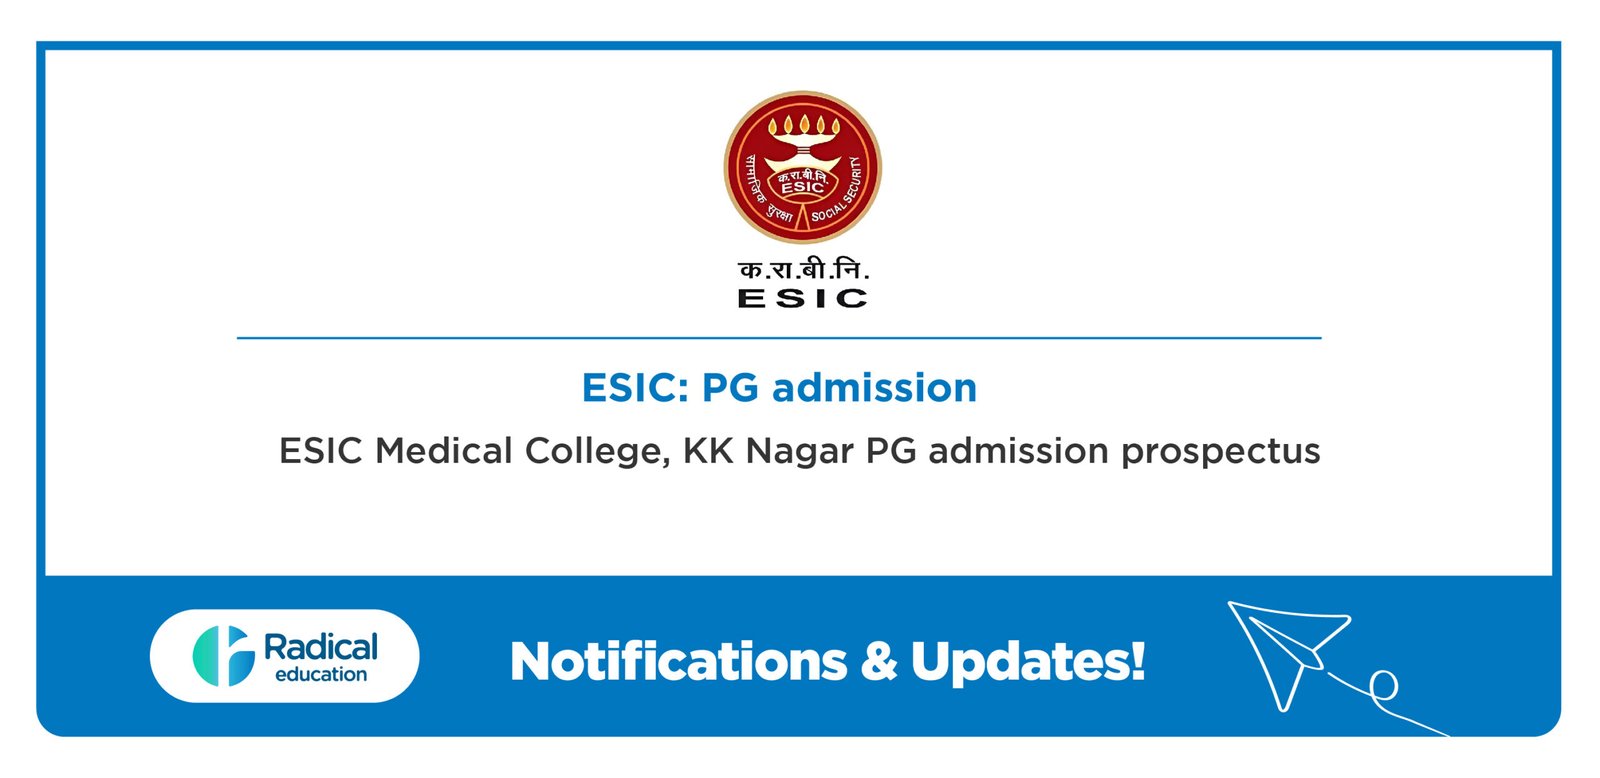 ESIC Medical College, KK Nagar PG admission prospectus